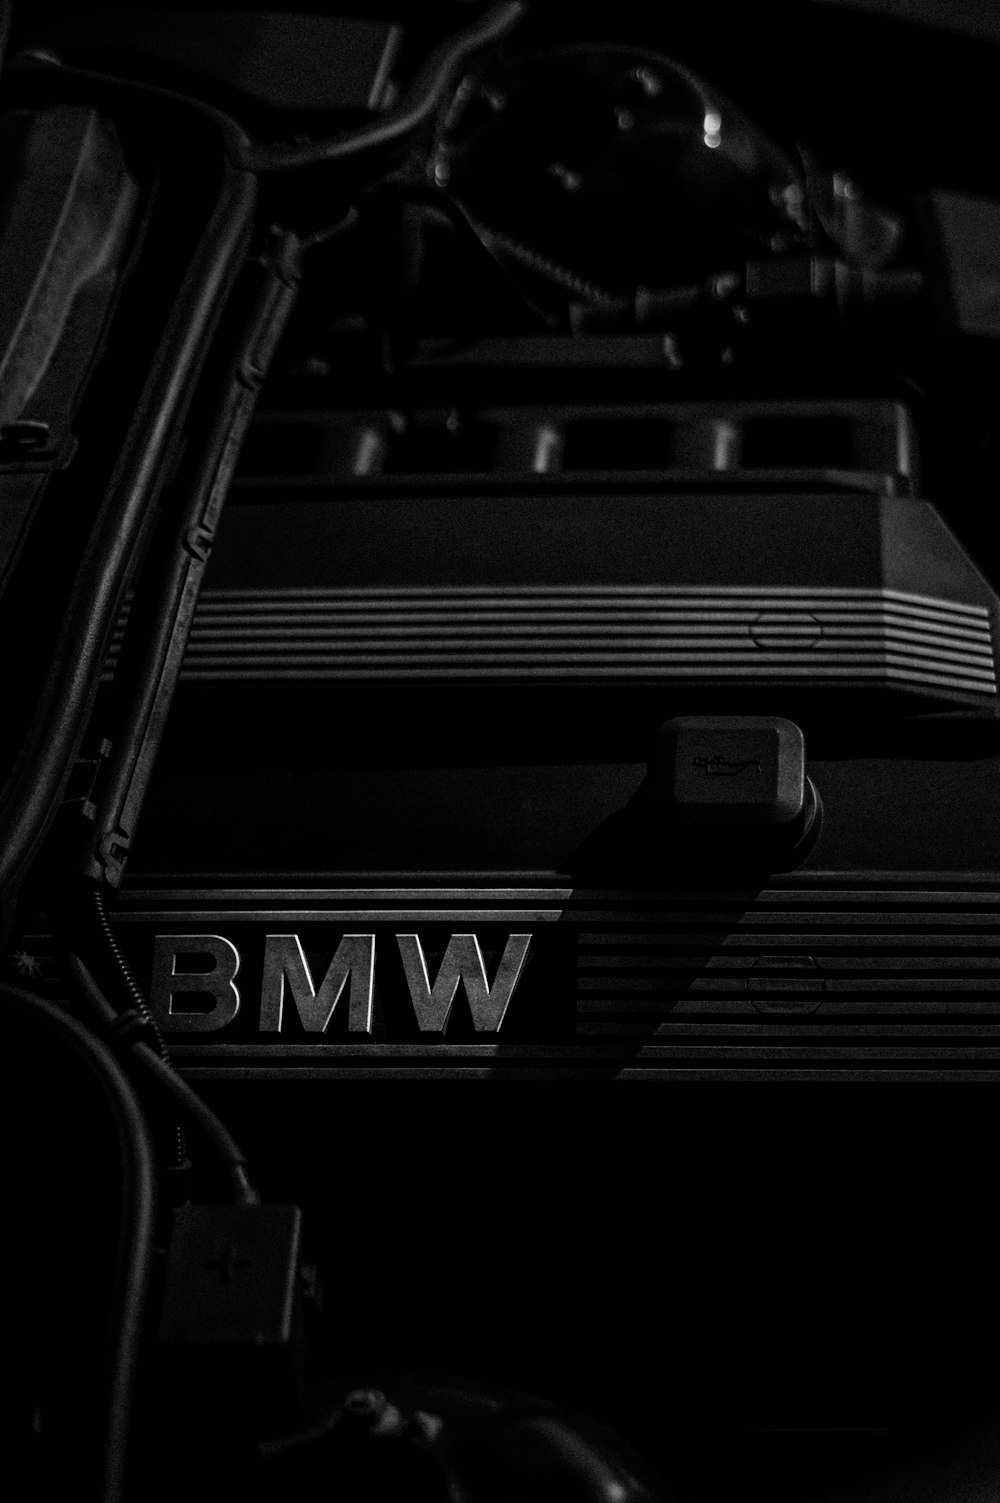 fotografia in scala di grigi dell'emblema BMW